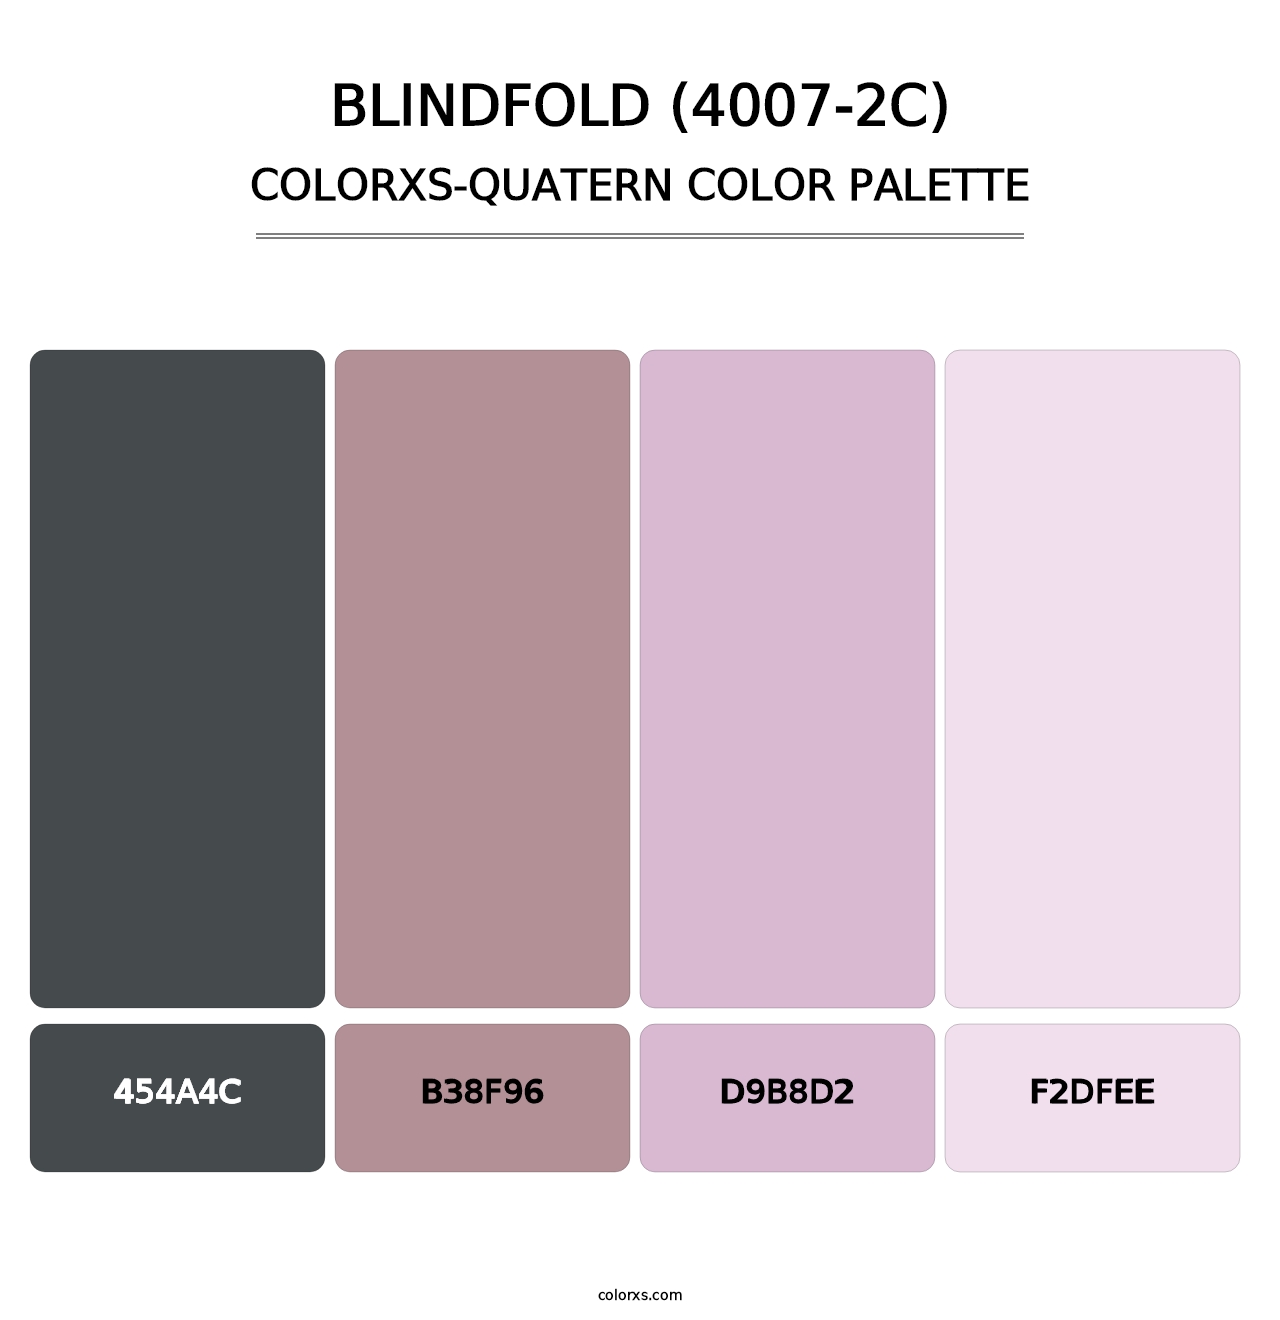 Blindfold (4007-2C) - Colorxs Quatern Palette